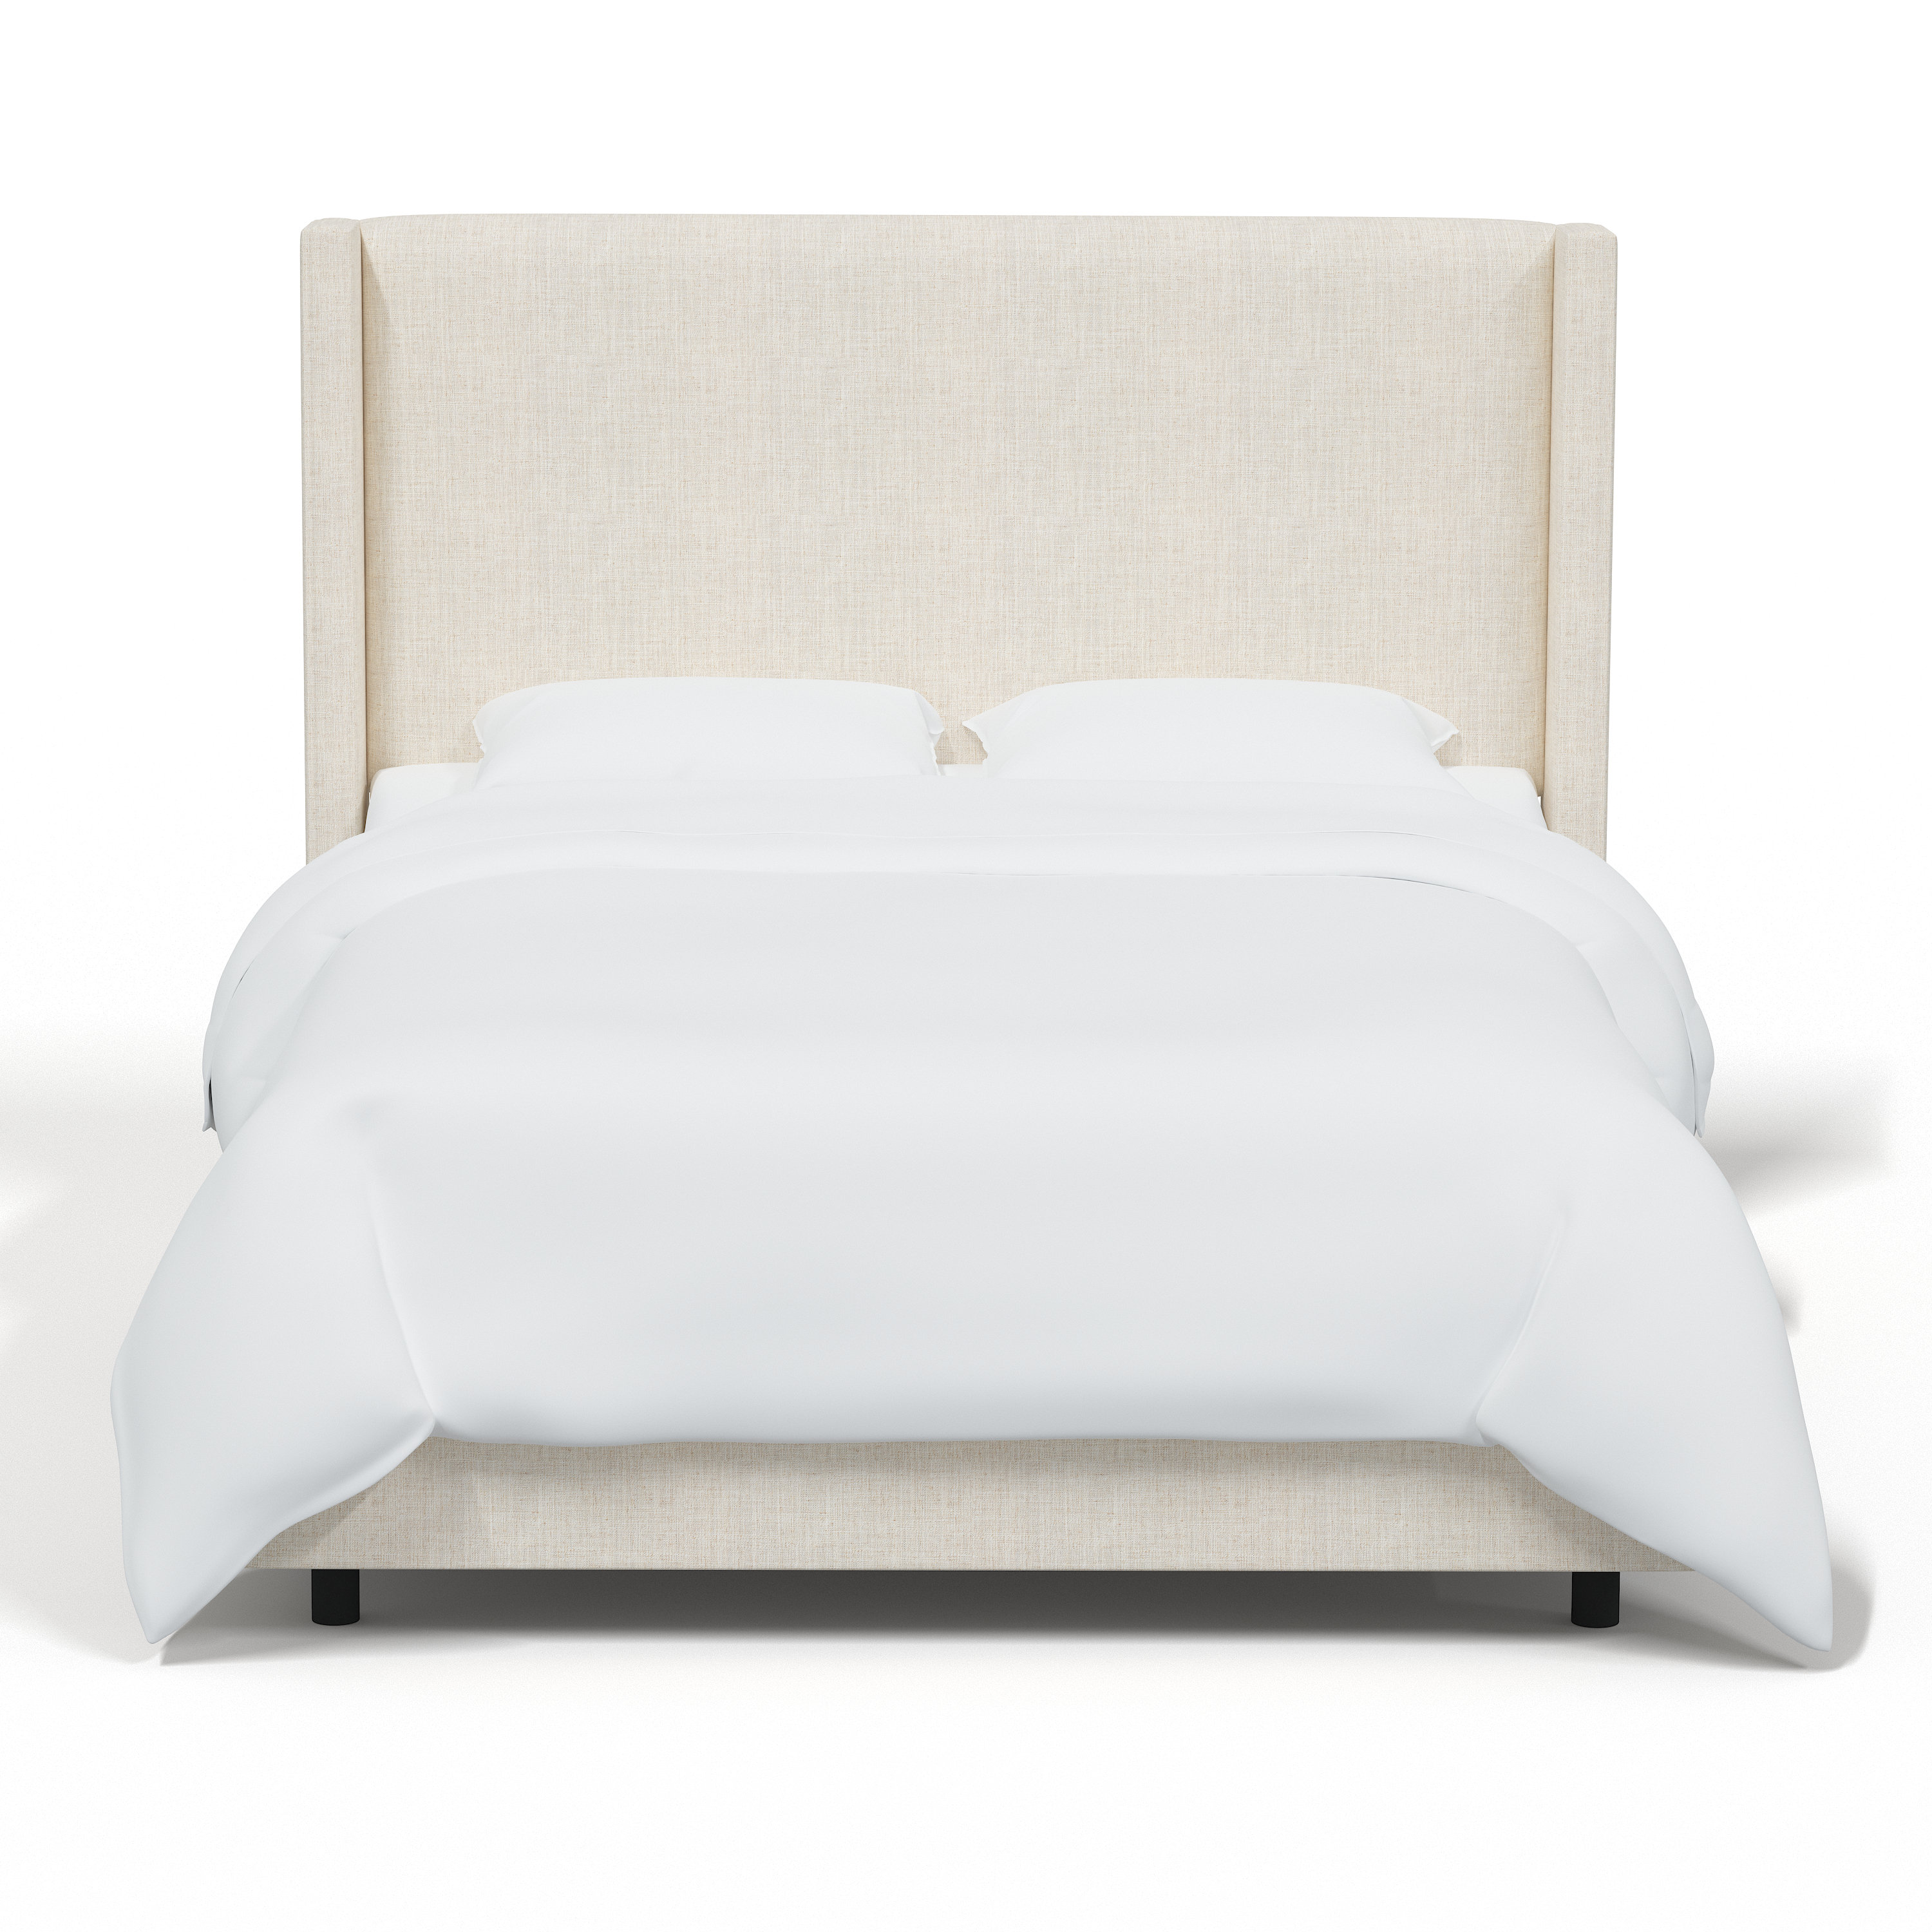 Lv type 42 bedding sets duvet cover lv bedroom sets luxury brand